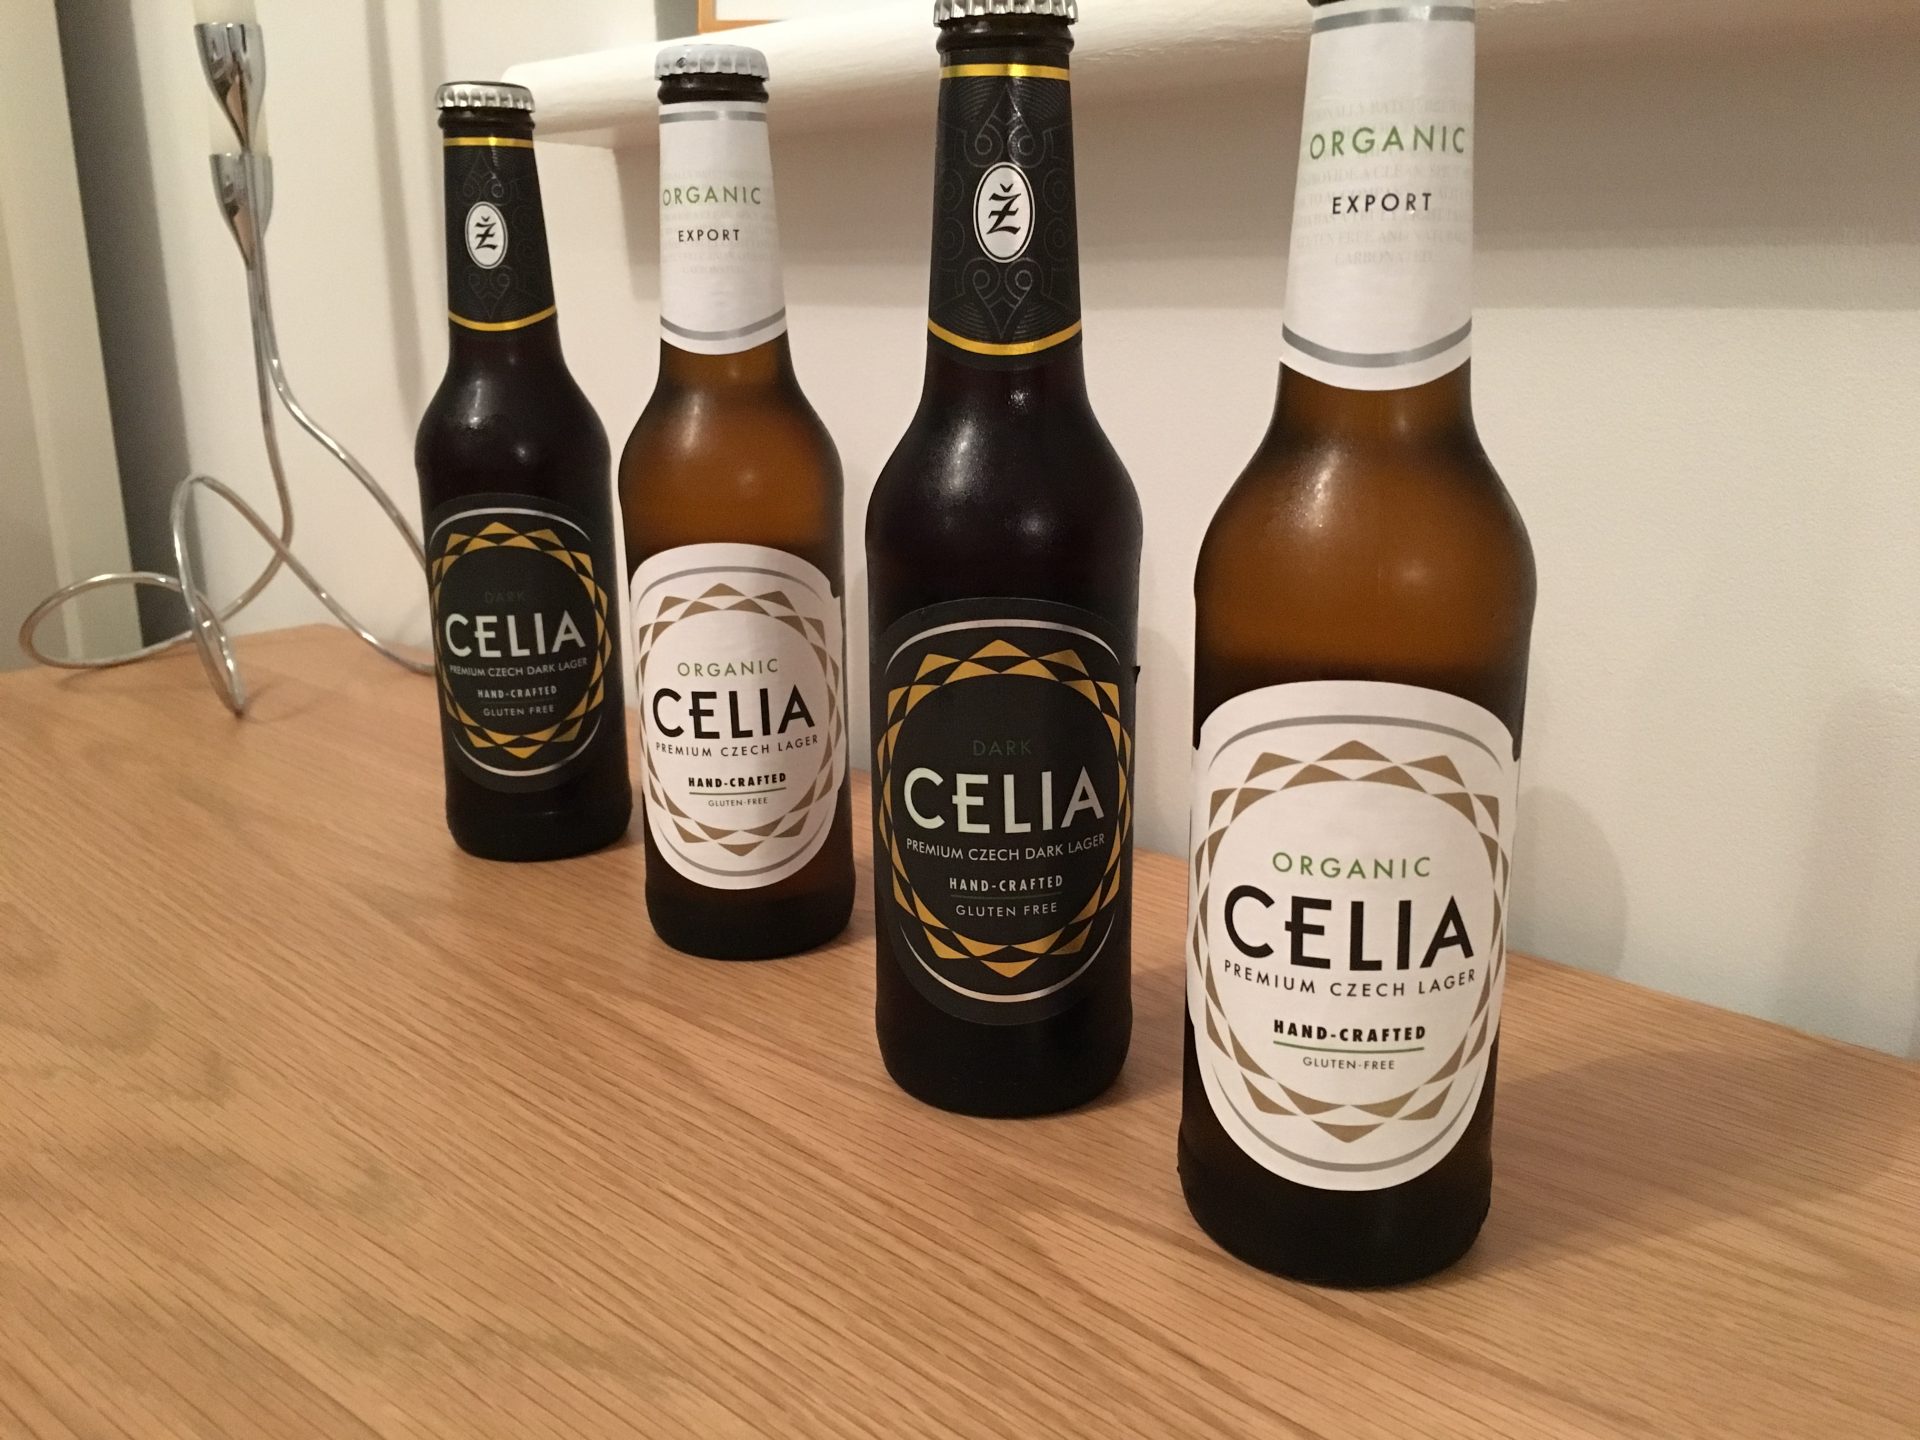 CELIA Craft Czech Lager